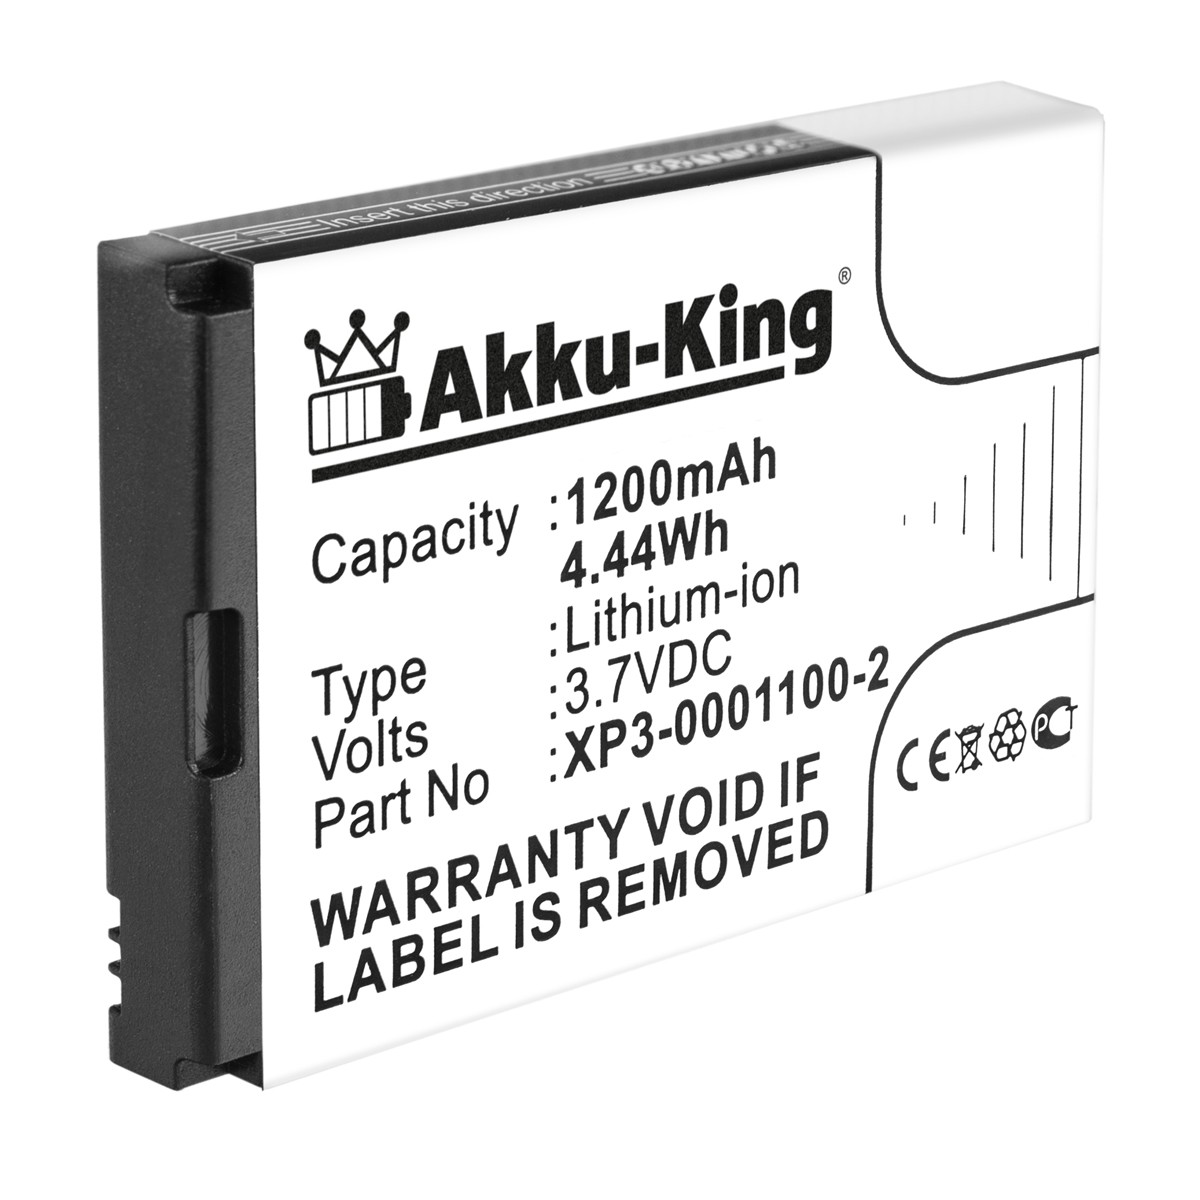 AKKU-KING Akku XP3-0001100-2 Li-Ion mit 3.7 1200mAh Socketmobile Handy-Akku, Volt, kompatibel